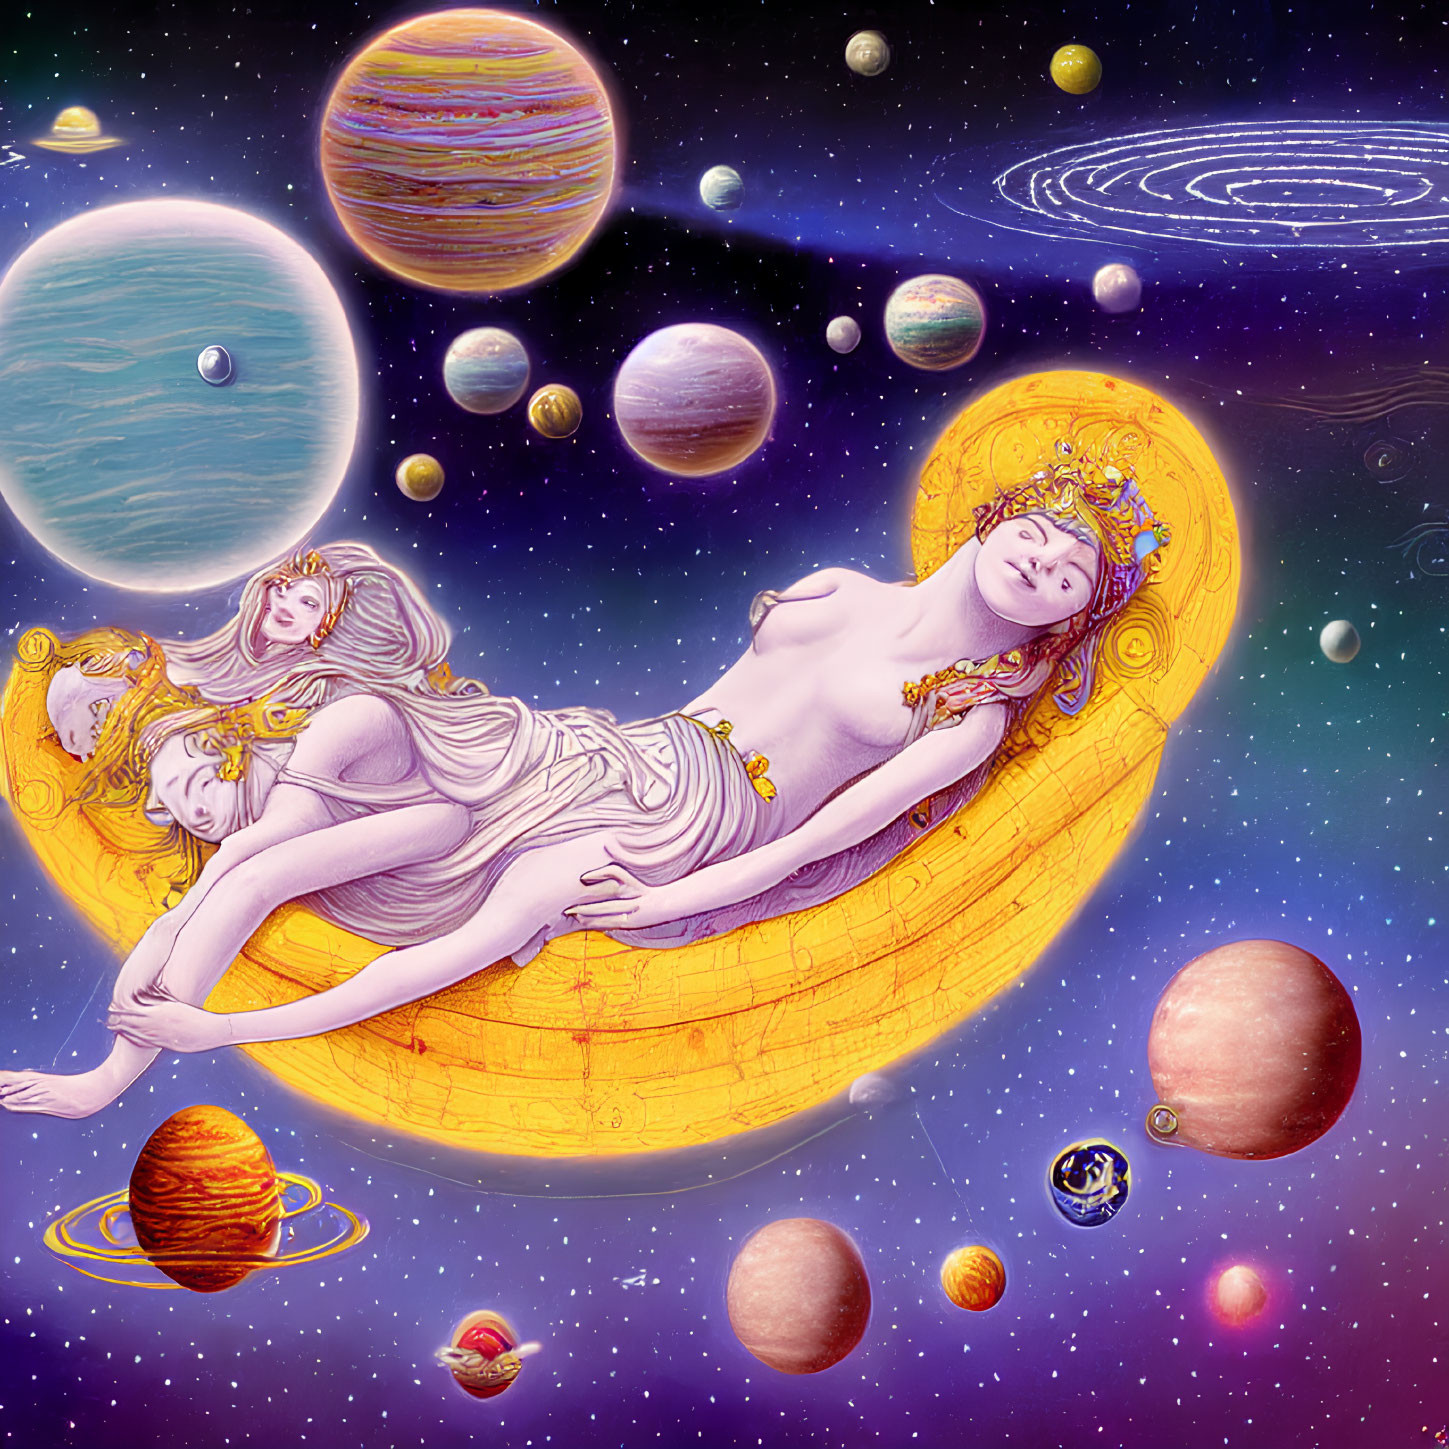 Illustration of female figure on crescent moon in cosmic scene